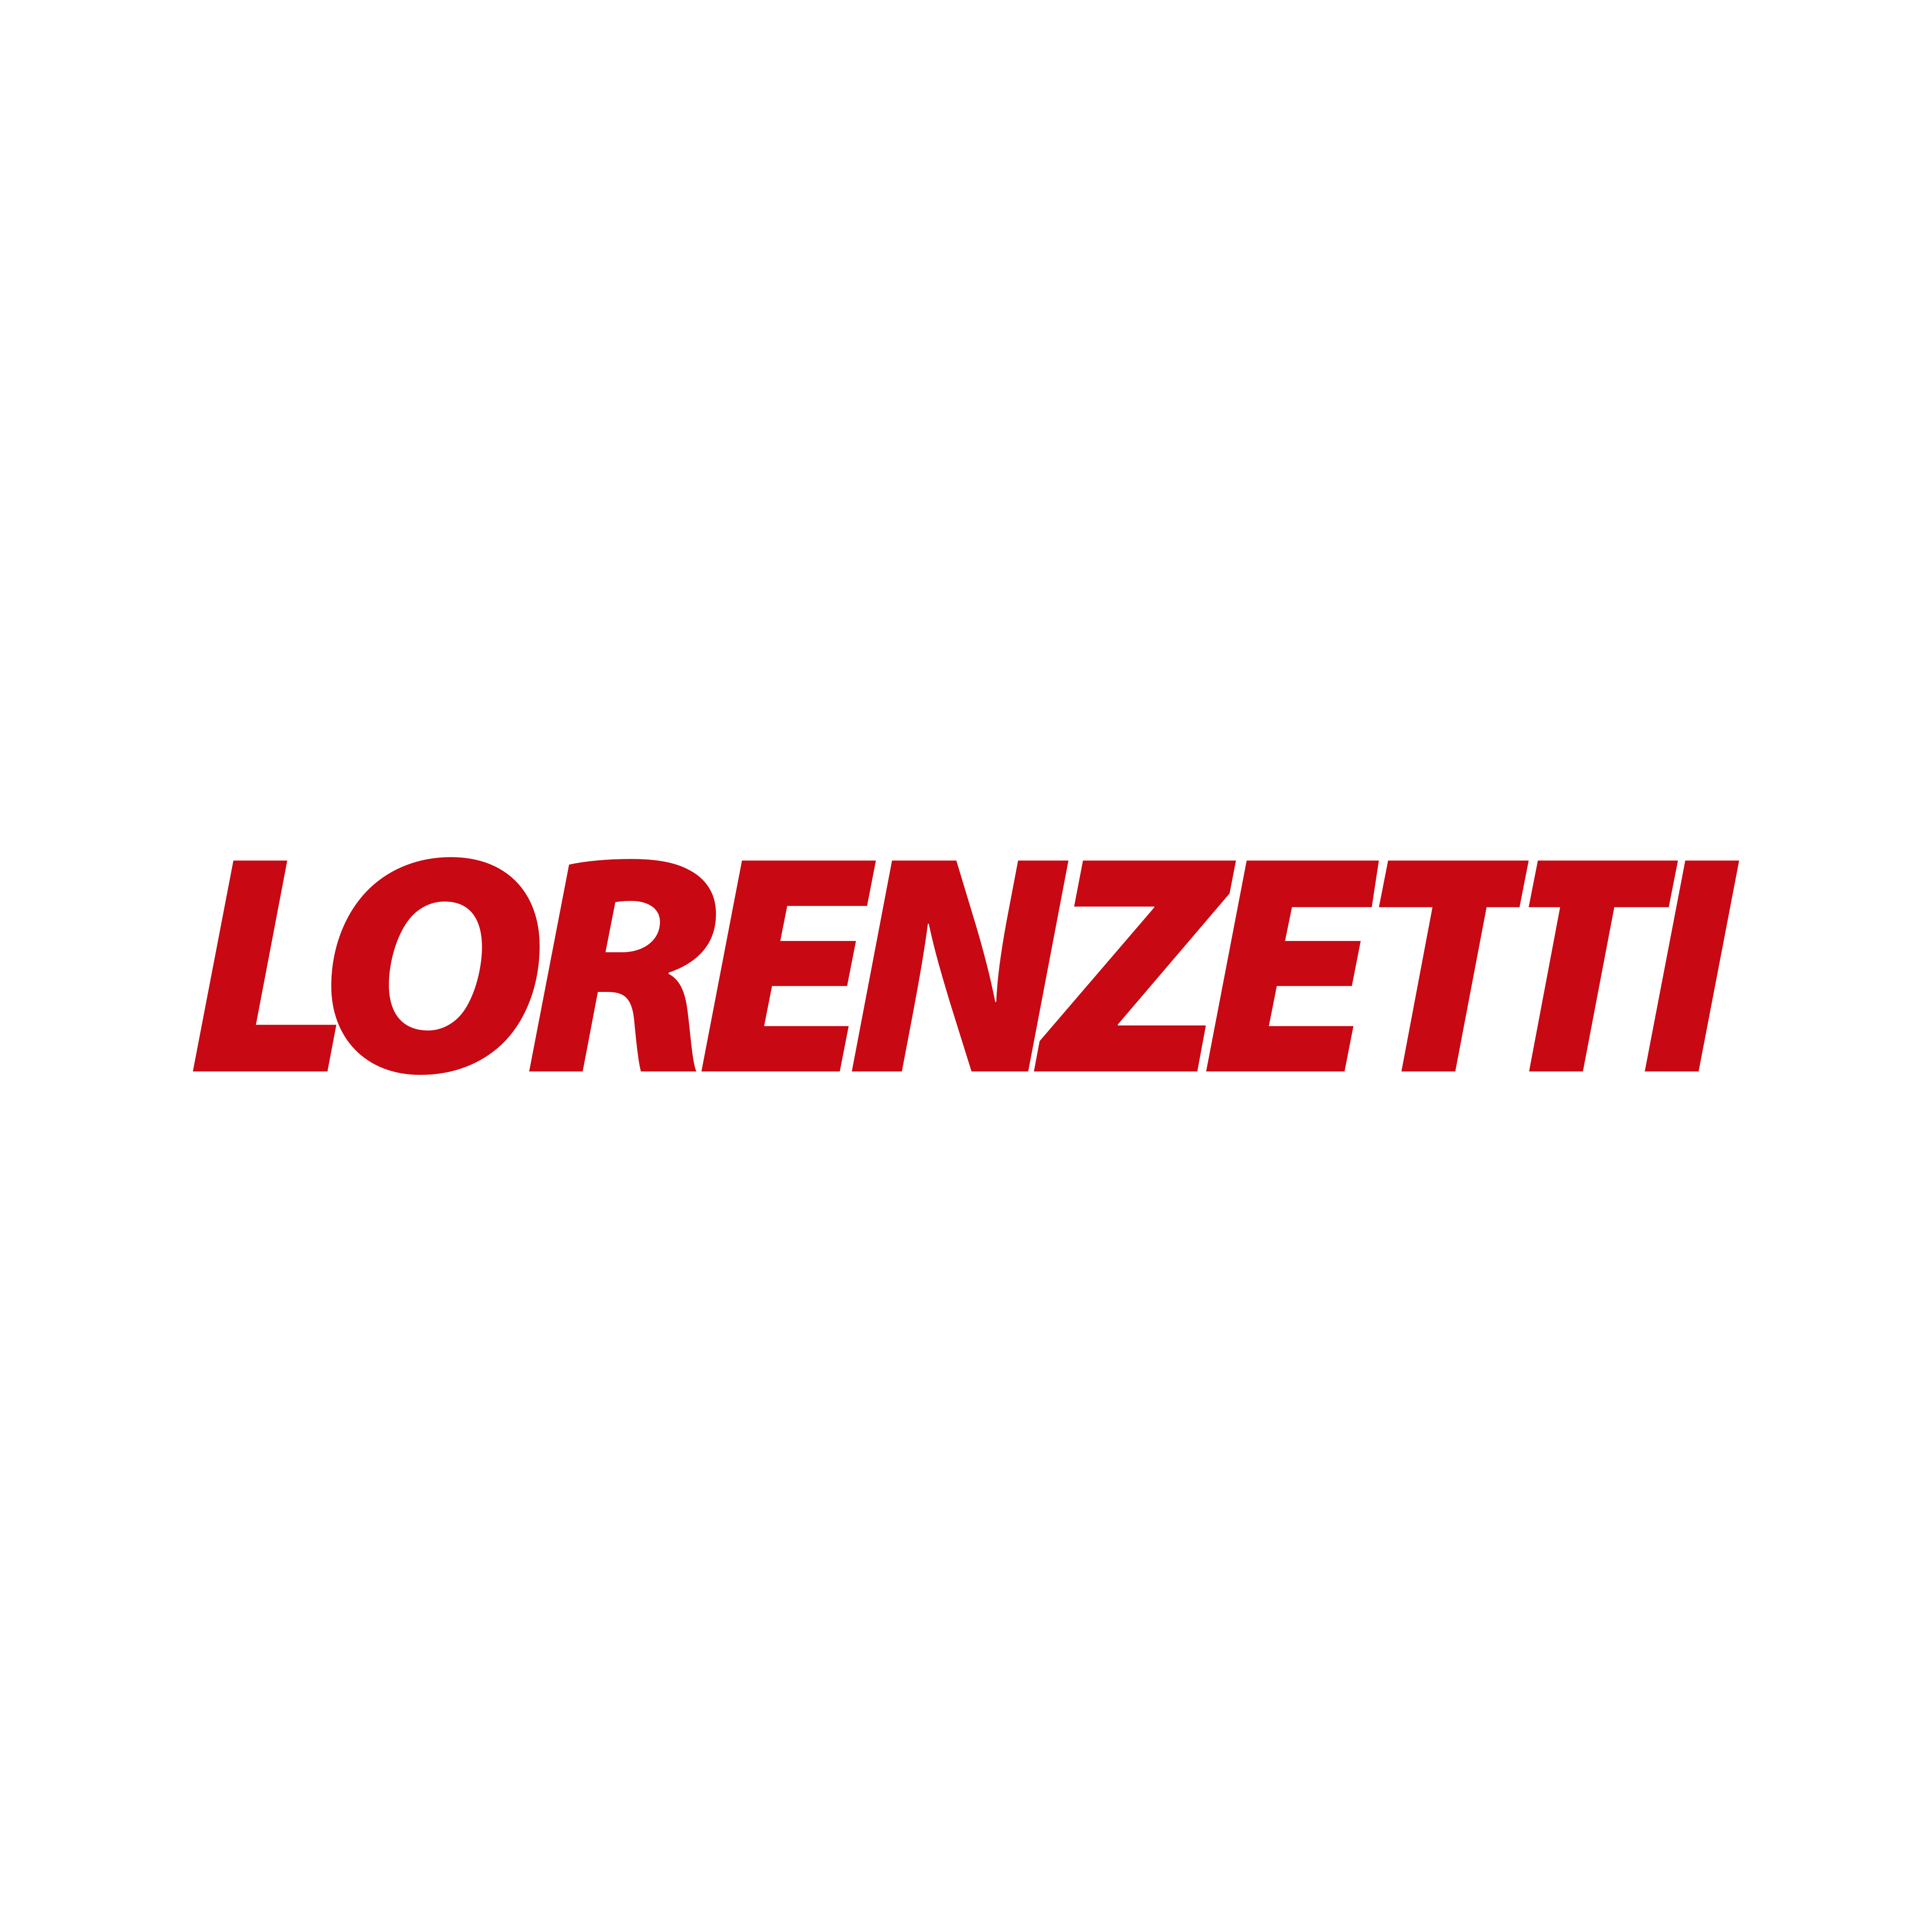 lorenzetti logo 0 - Lorenzetti Logo